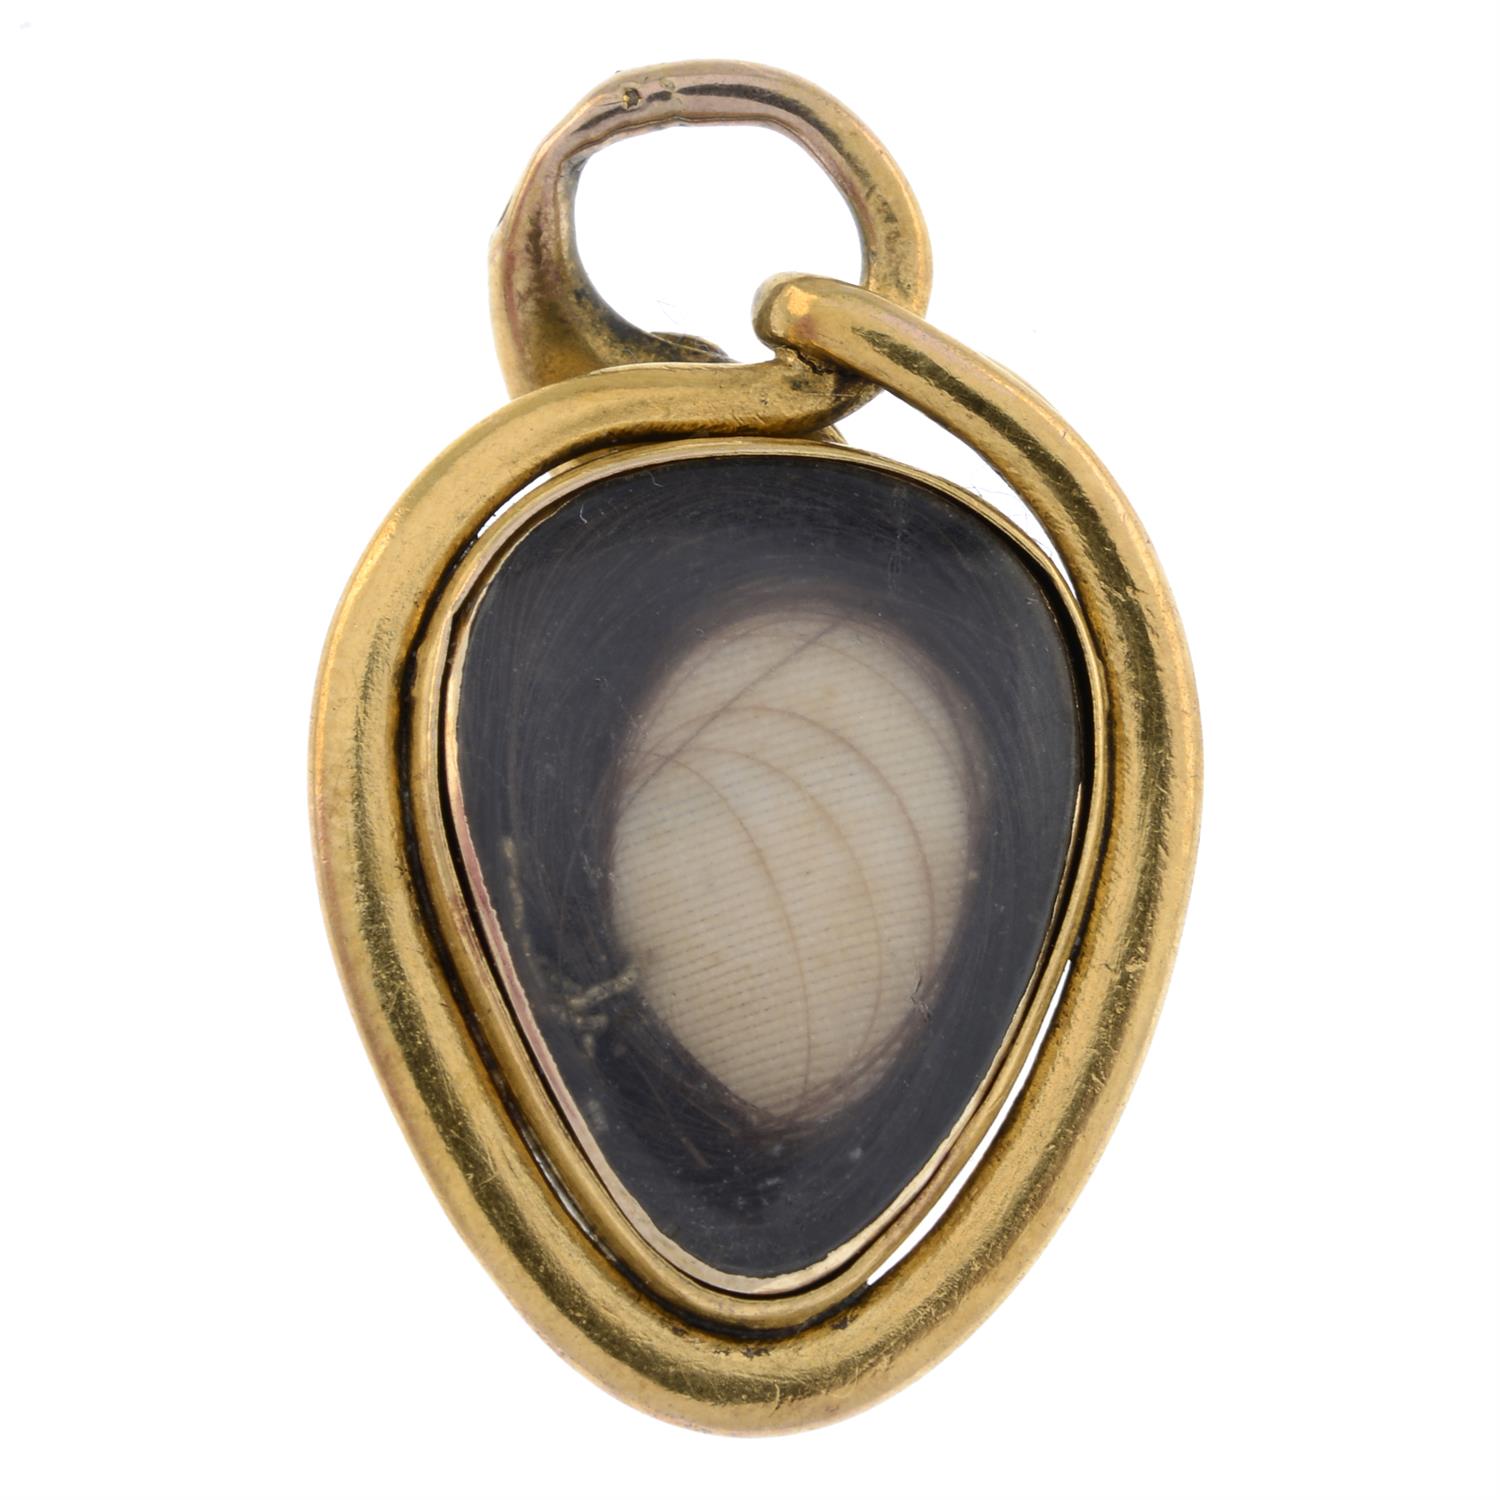 Victorian gold snake locket pendant - Image 2 of 2